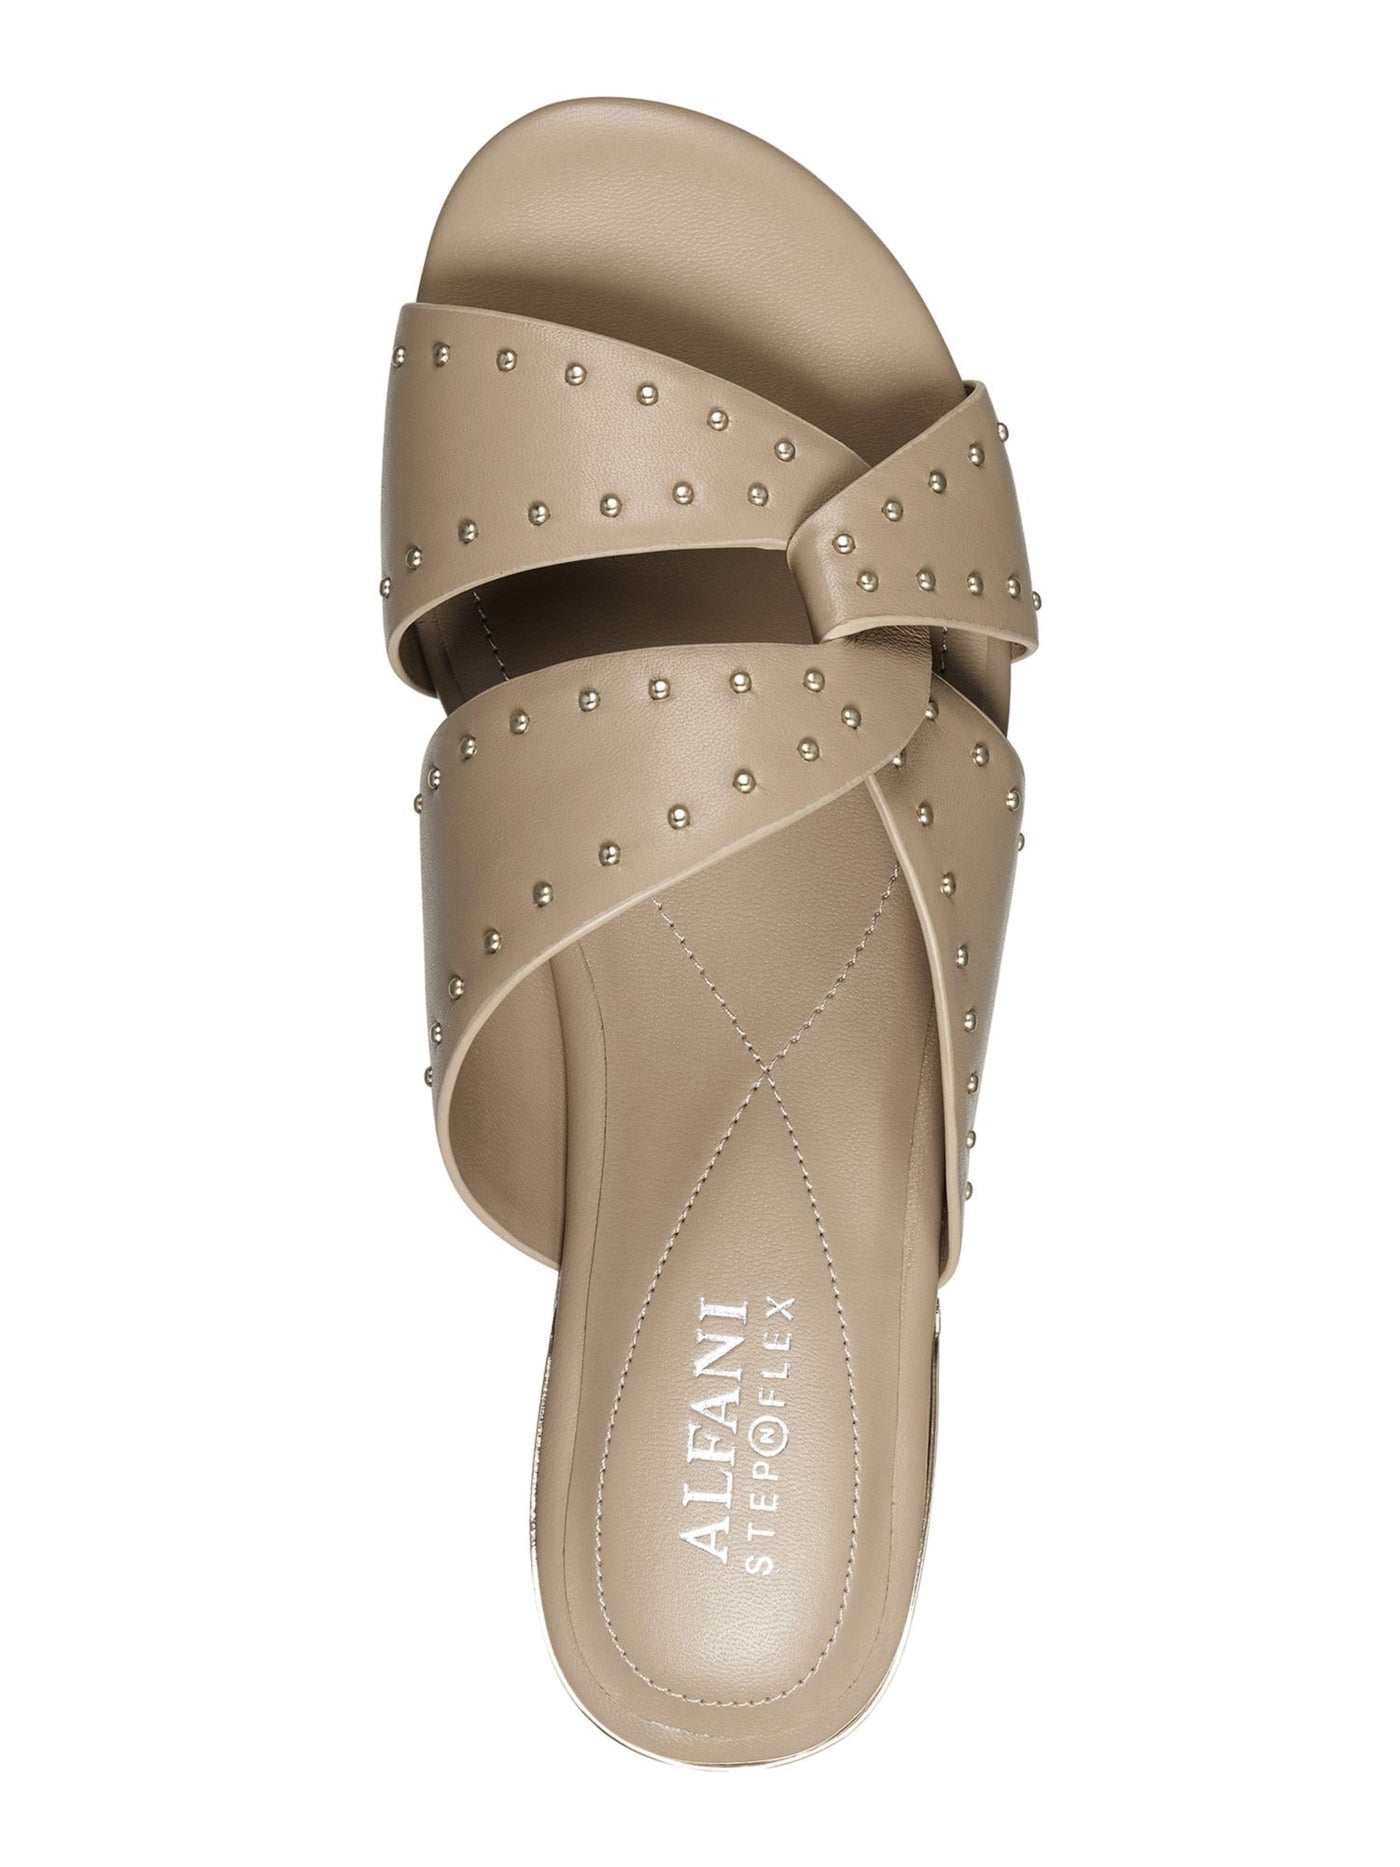 ALFANI Womens Beige Studded Padded Danicah Round Toe Block Heel Slip On Leather Sandals Shoes 7 M